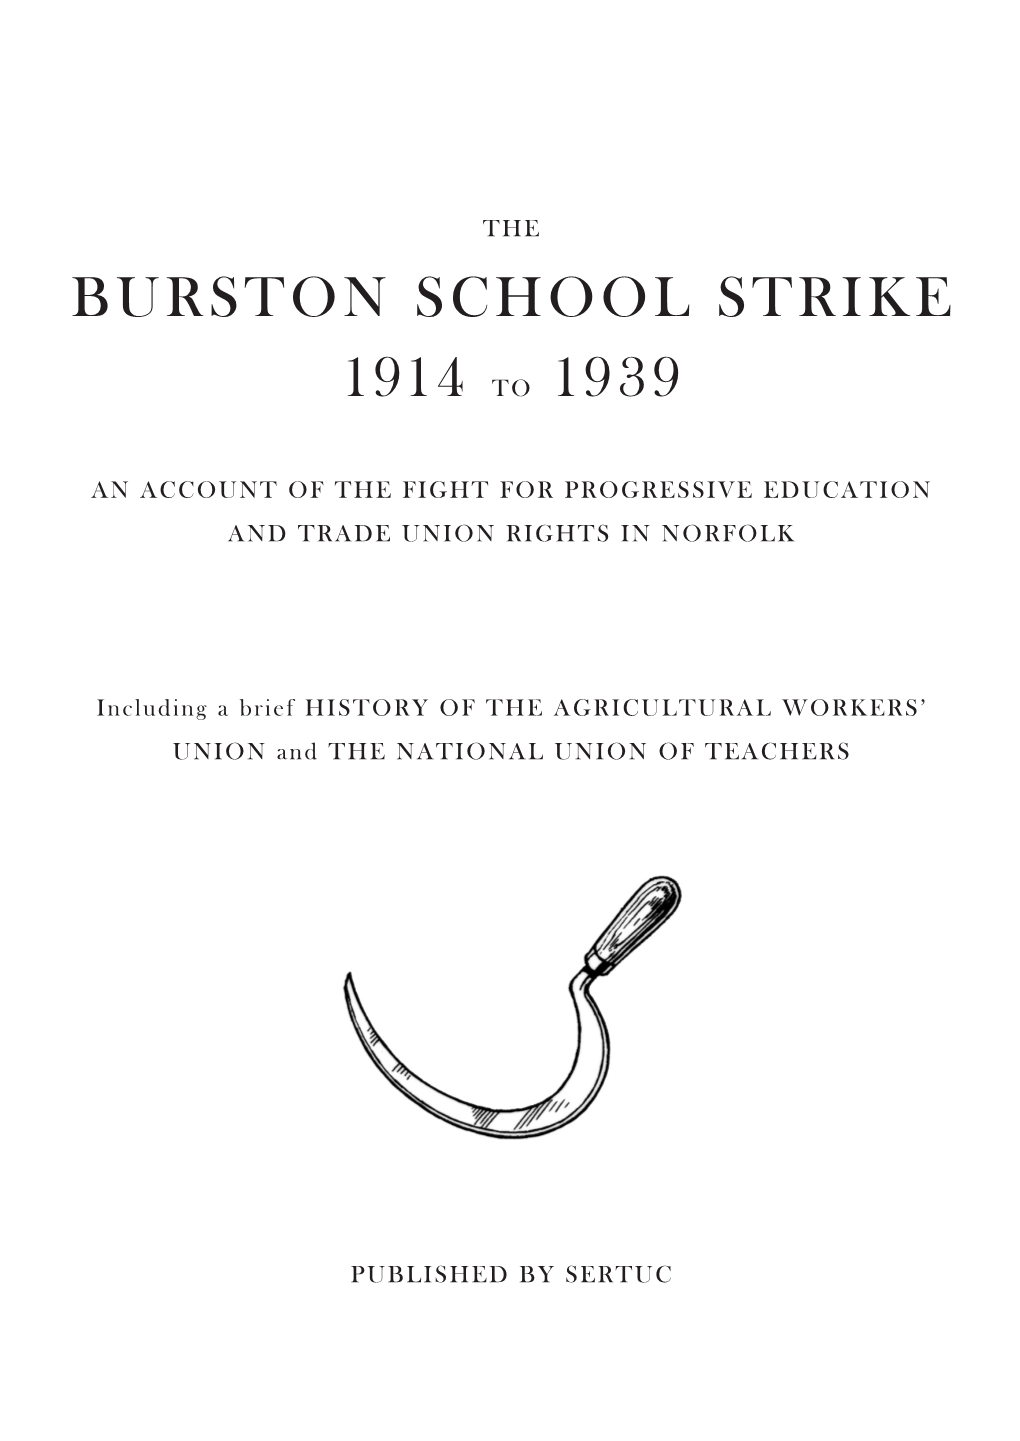 The Burston School Strike 1914 to 1939 Publication